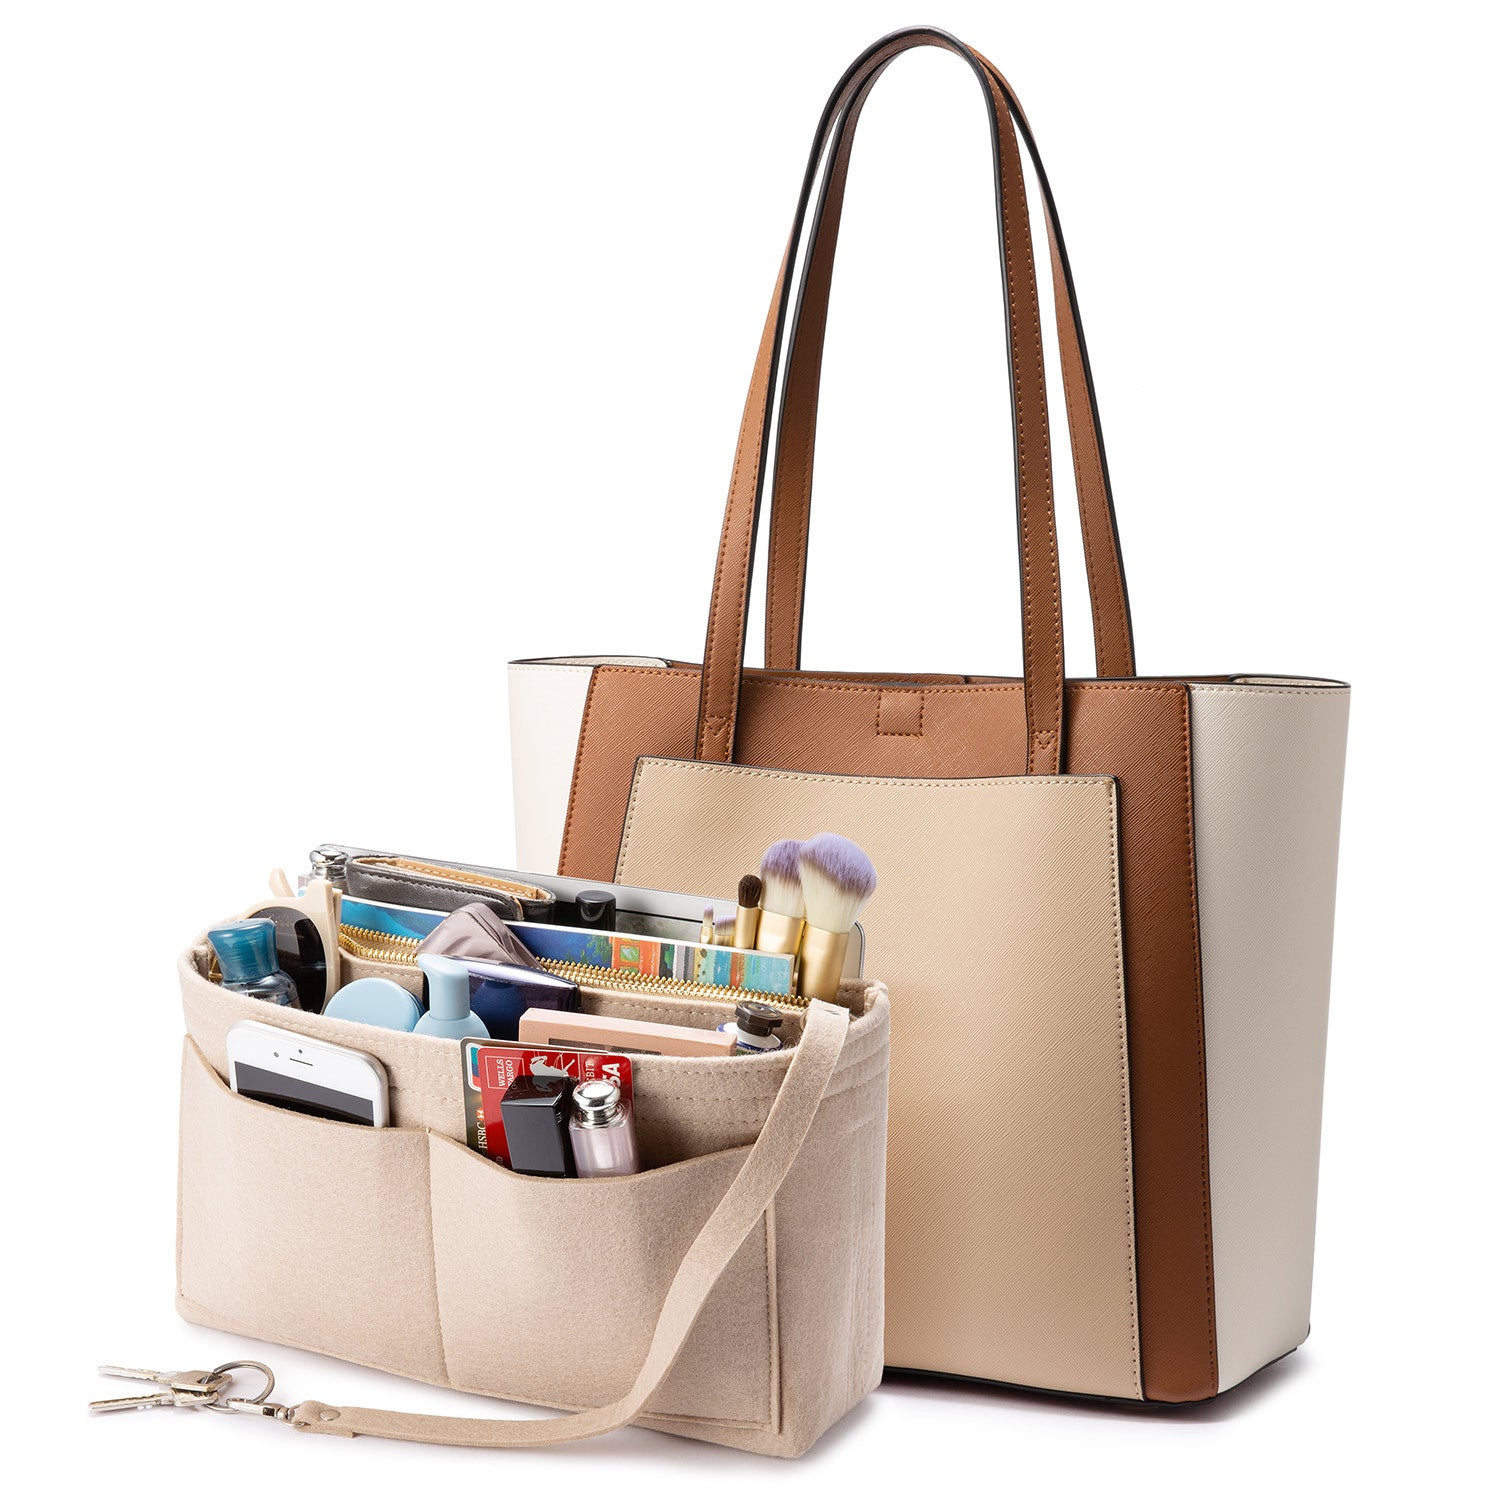 IVK Luxury Women's Brand Handheld Tote Bags Hot Selling Temperament Versatile Middle Aged Mom Bag